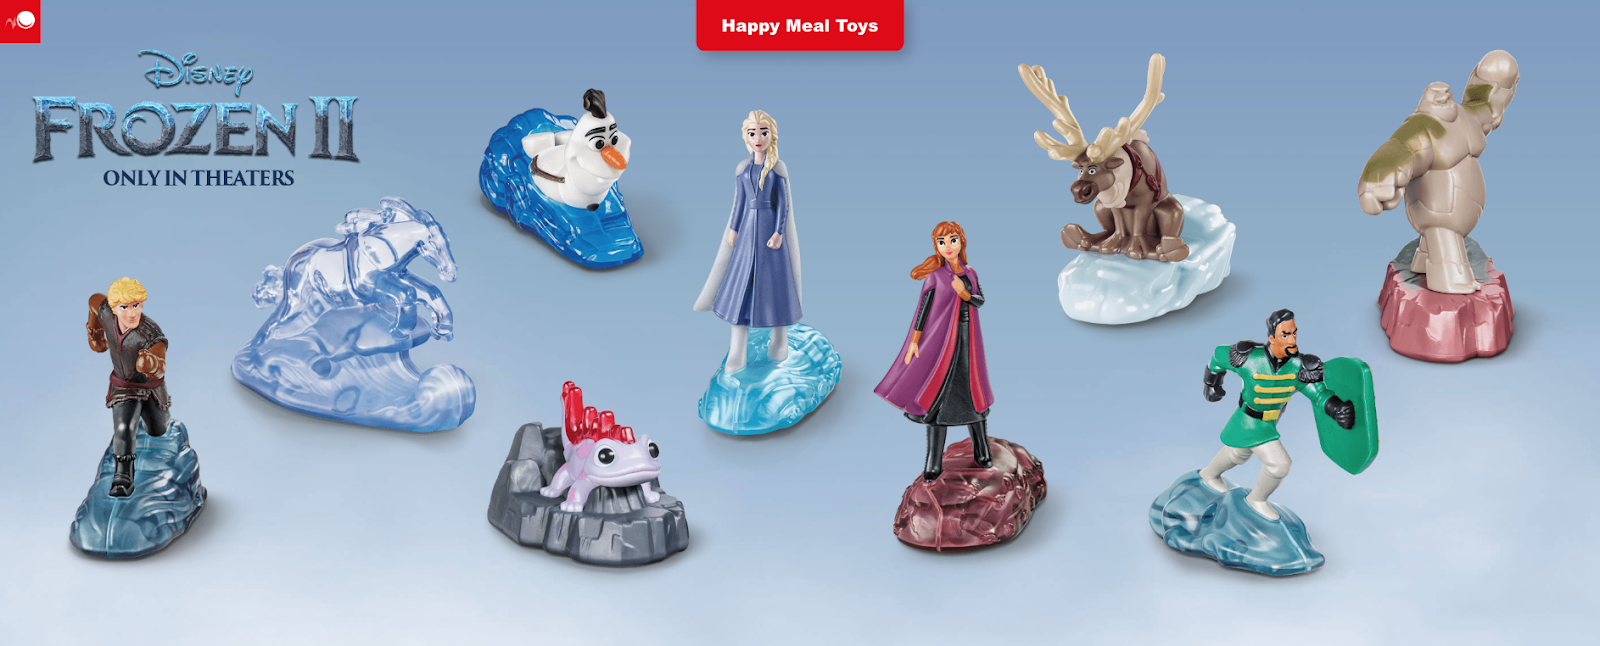 2019 McDonalds Happy Meal Toys Frozen Elsa 